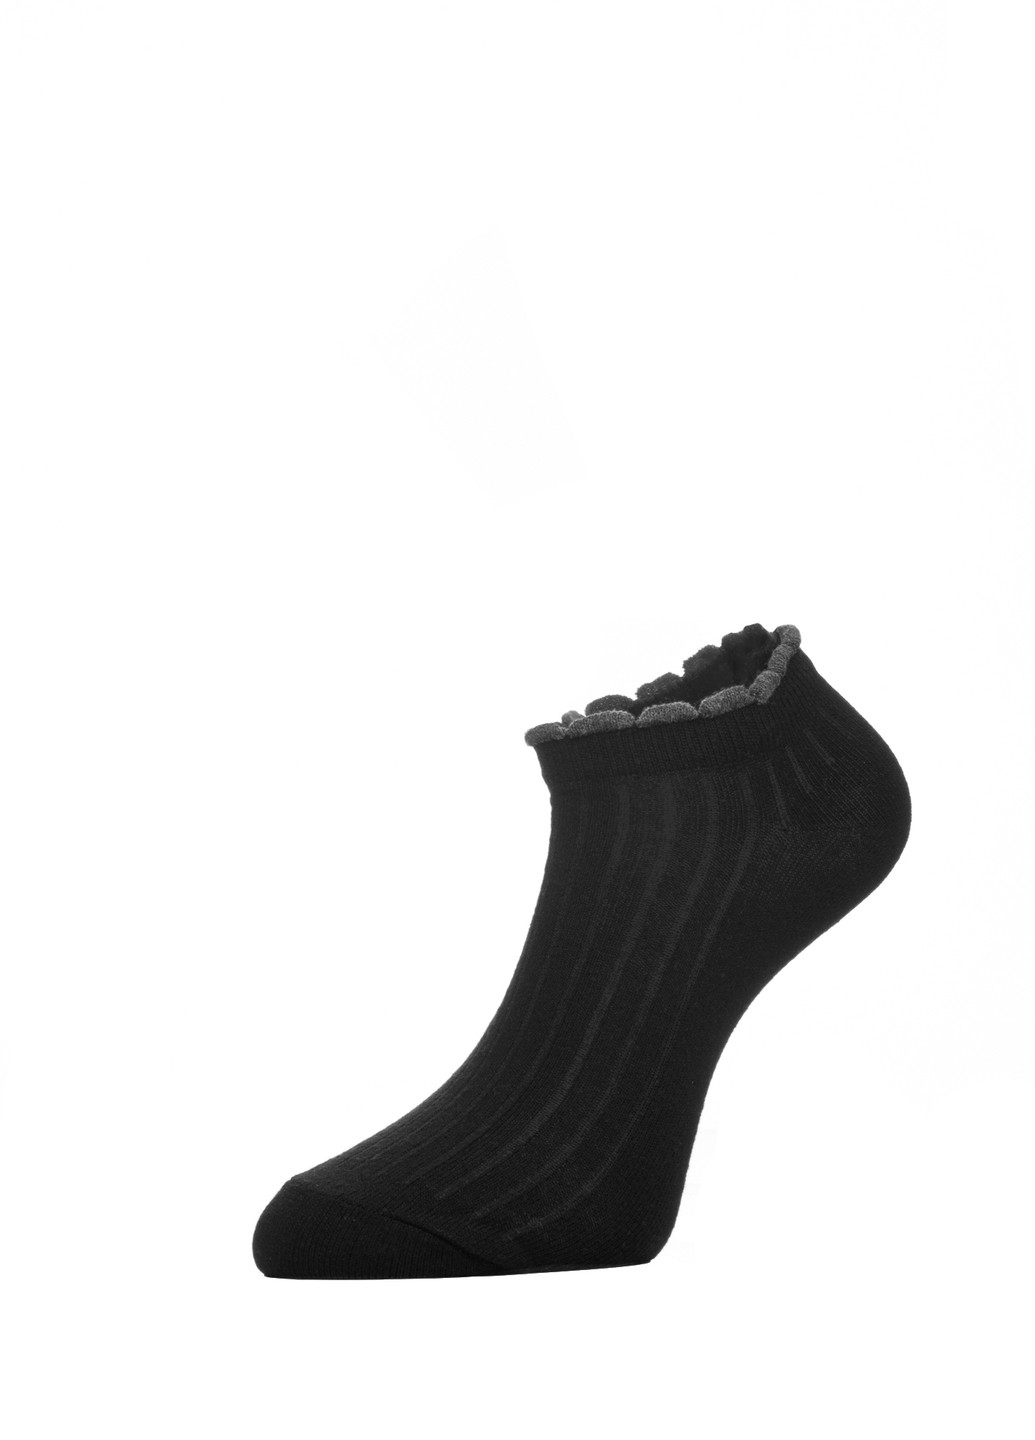 Шкарпетки жін. арт., р.25, 409 чорний CHOBOT 50s-69 (225542643)